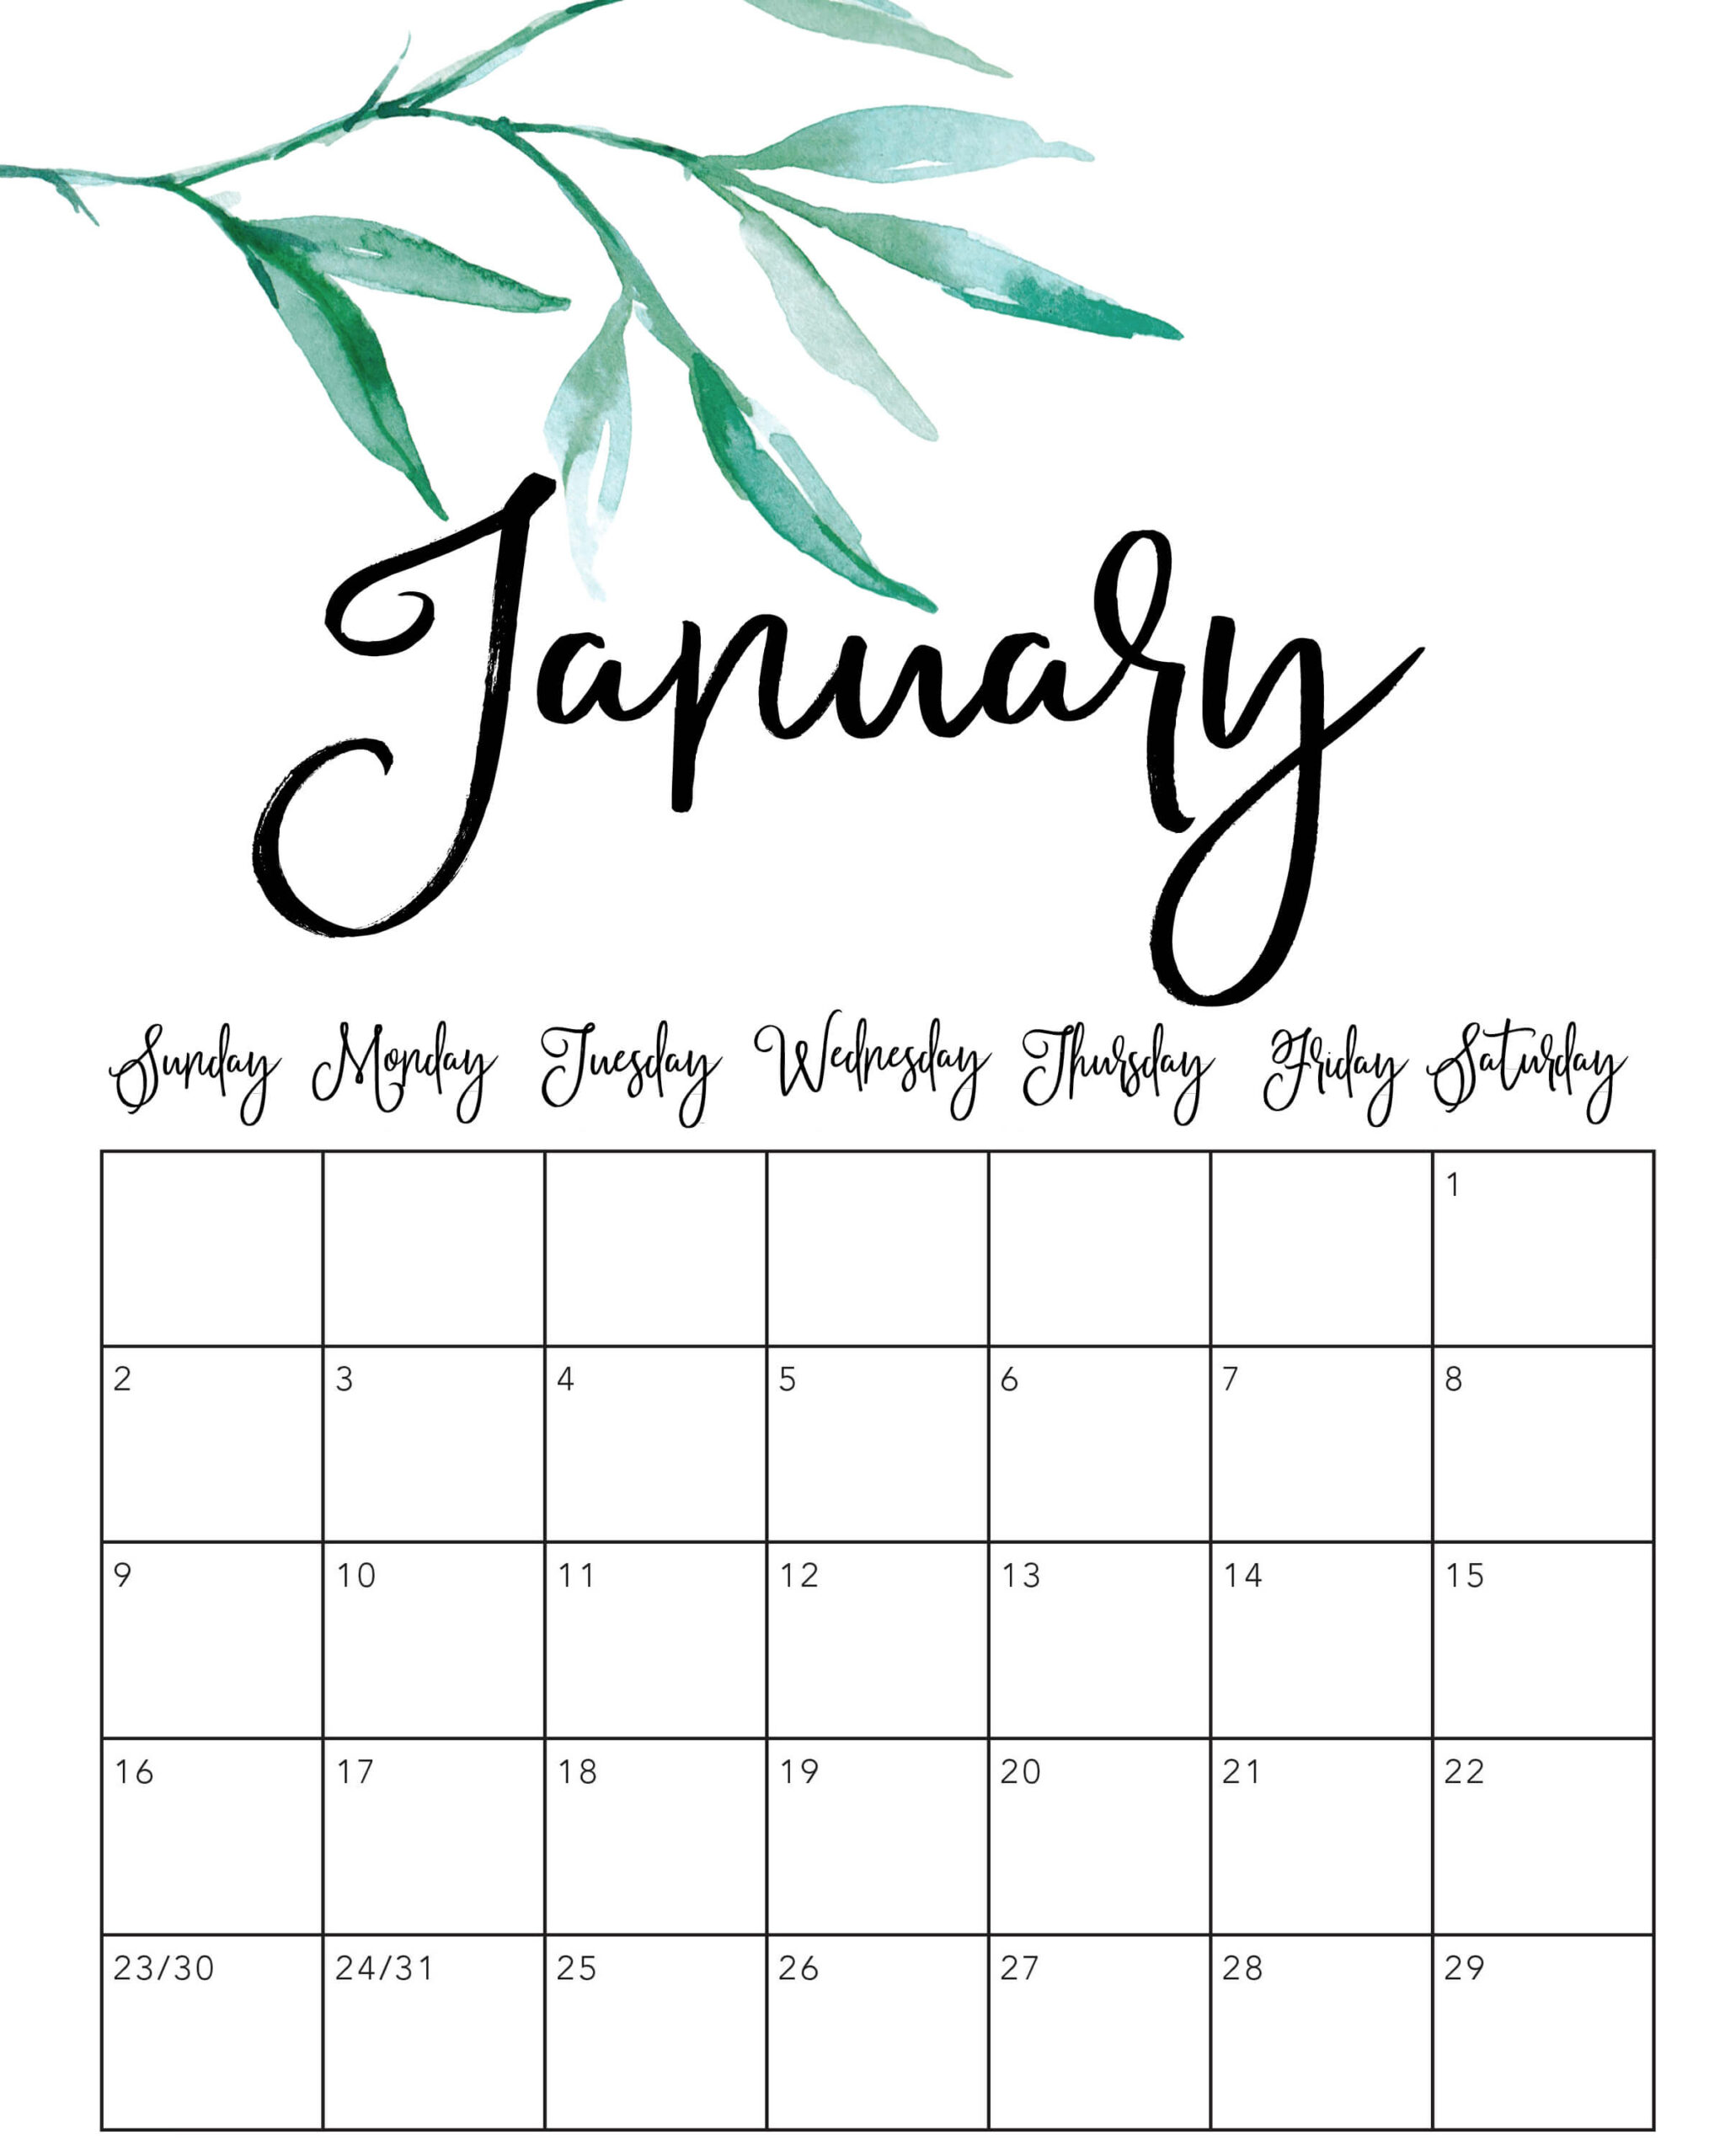 Catch Calendar Of 2022 January